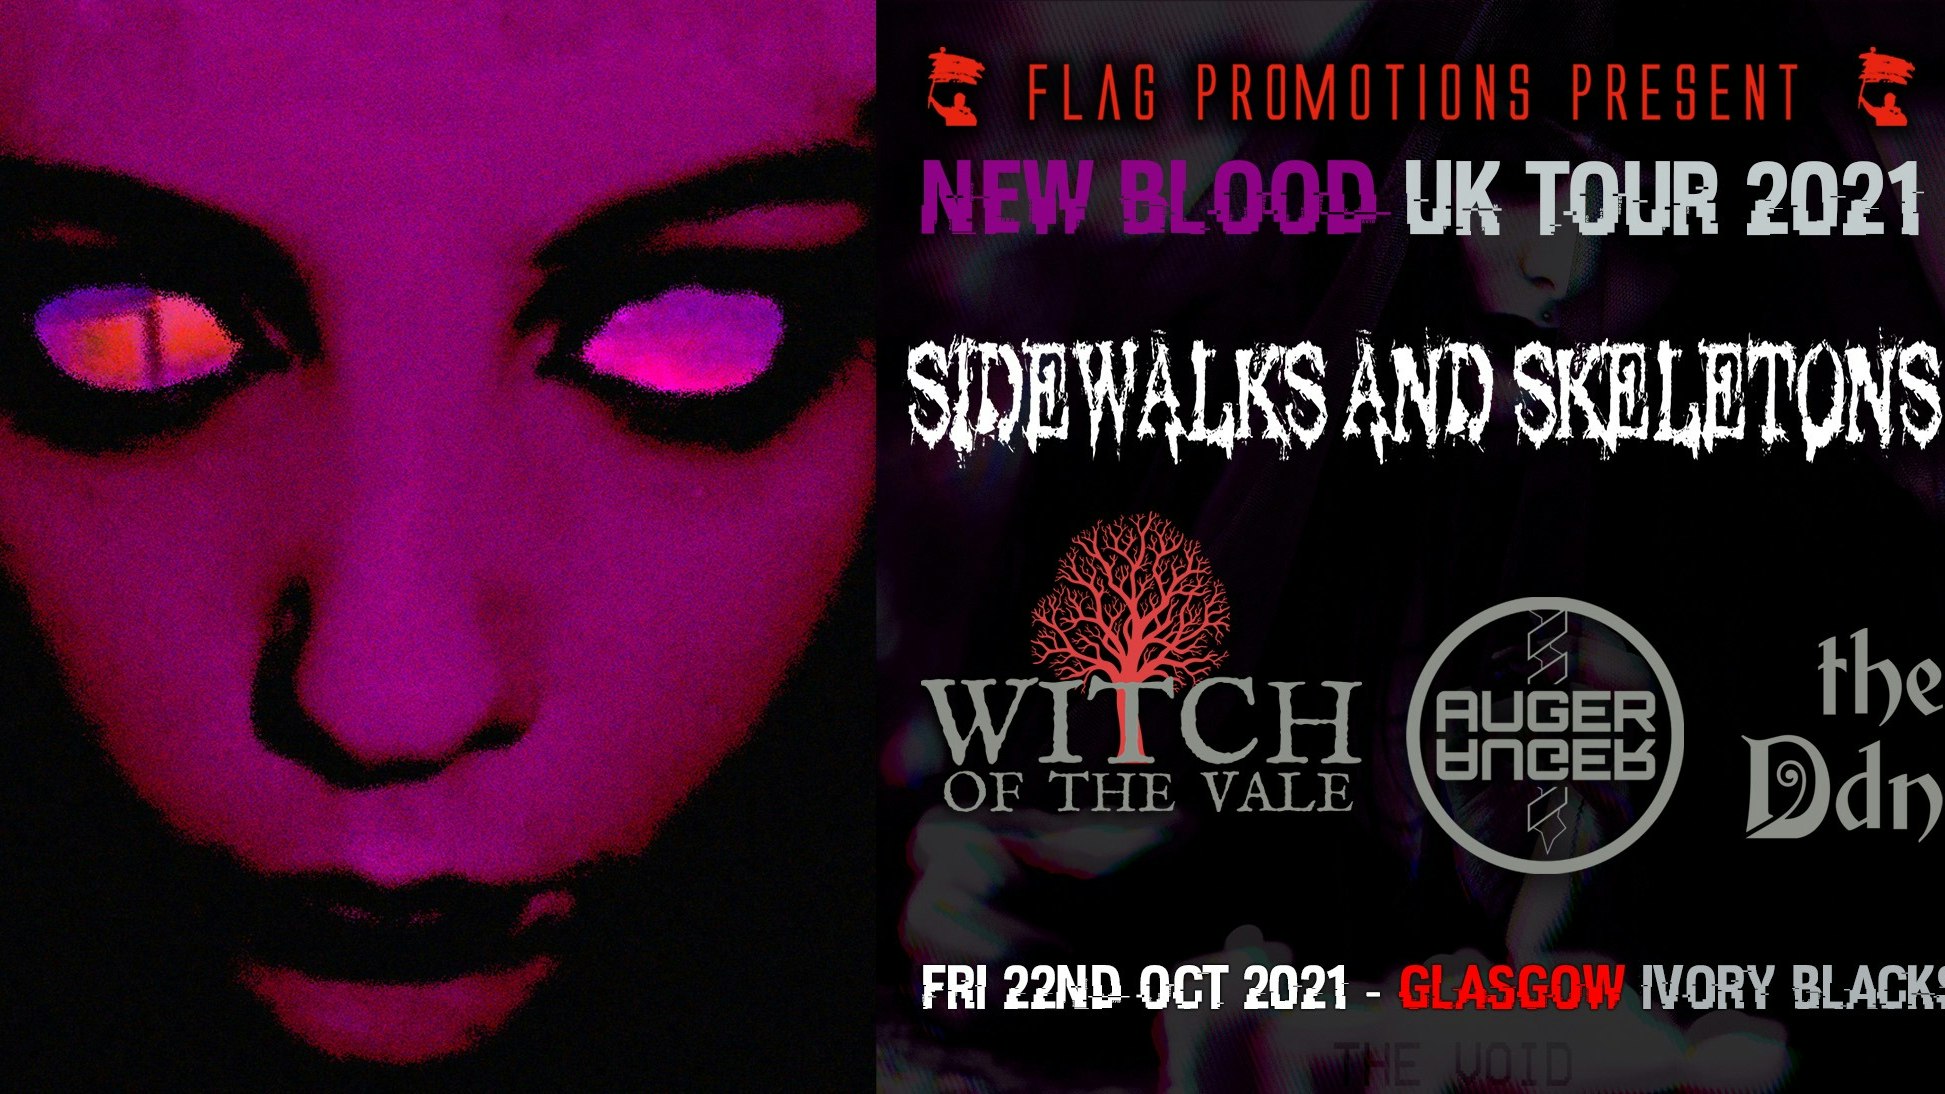 NEW BLOOD UK TOUR 2021